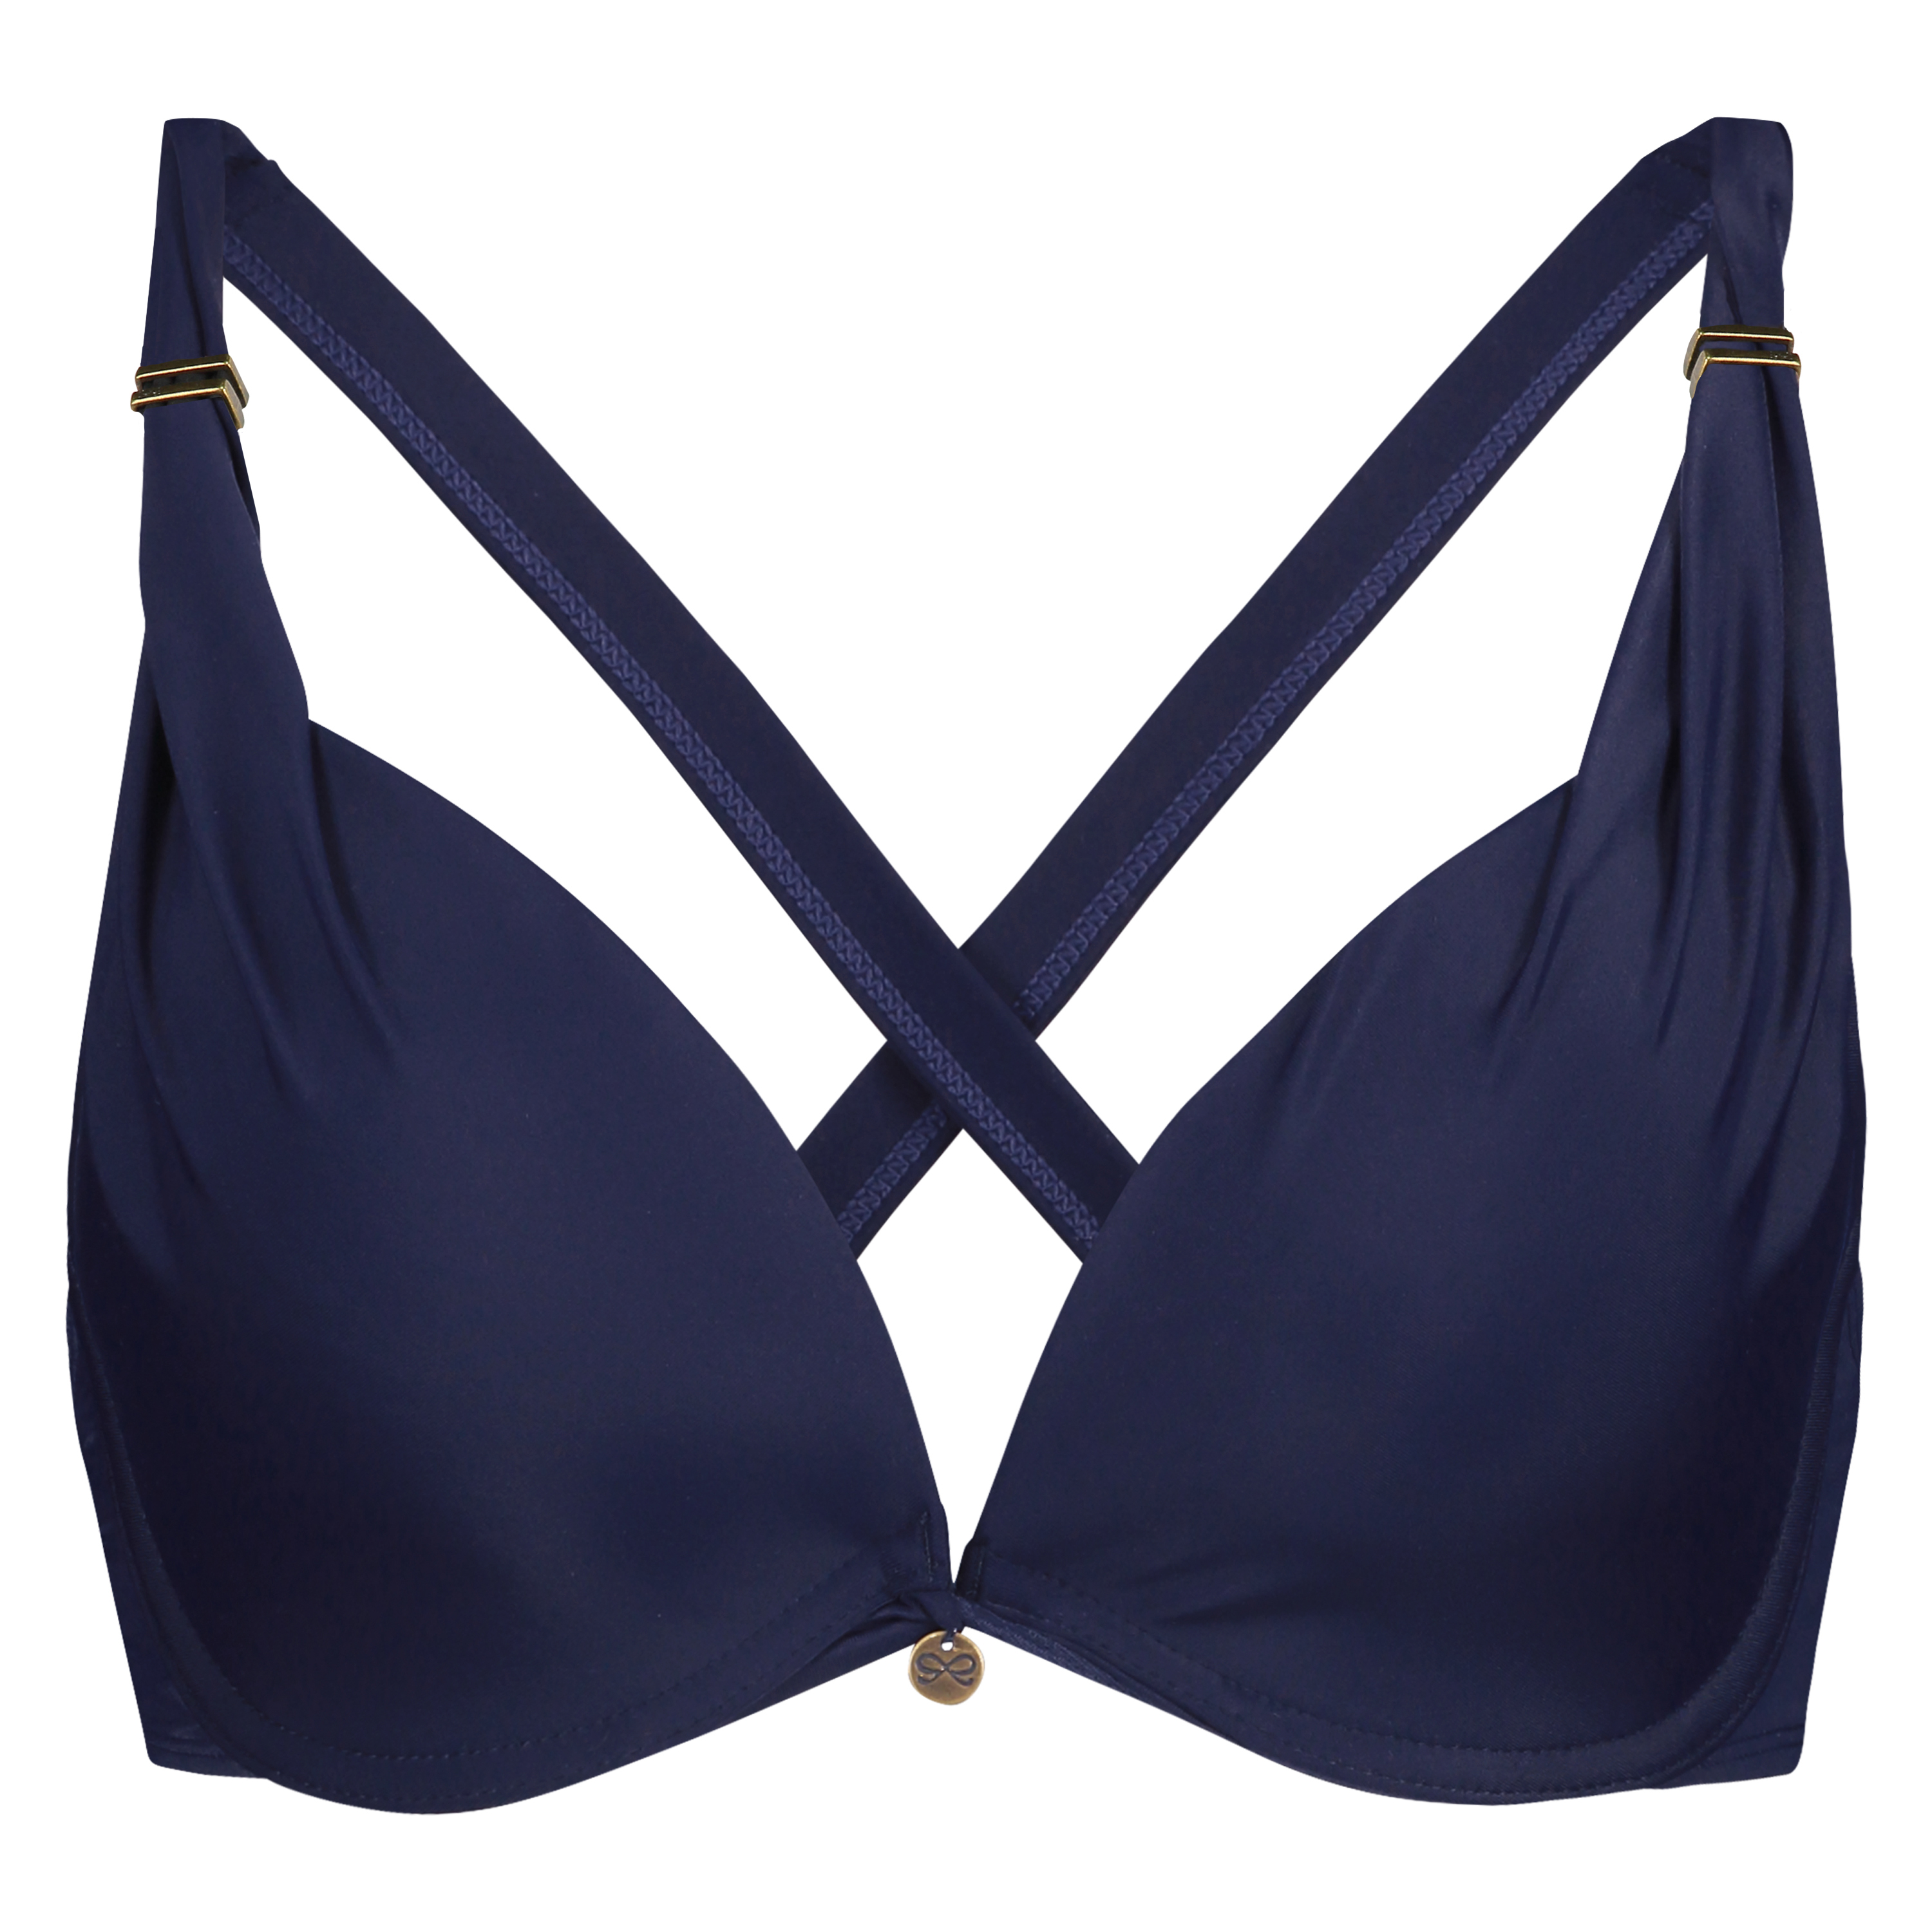 Voorgevormde beugel bikini top Sunset Dreams Cup E +, Blauw, main